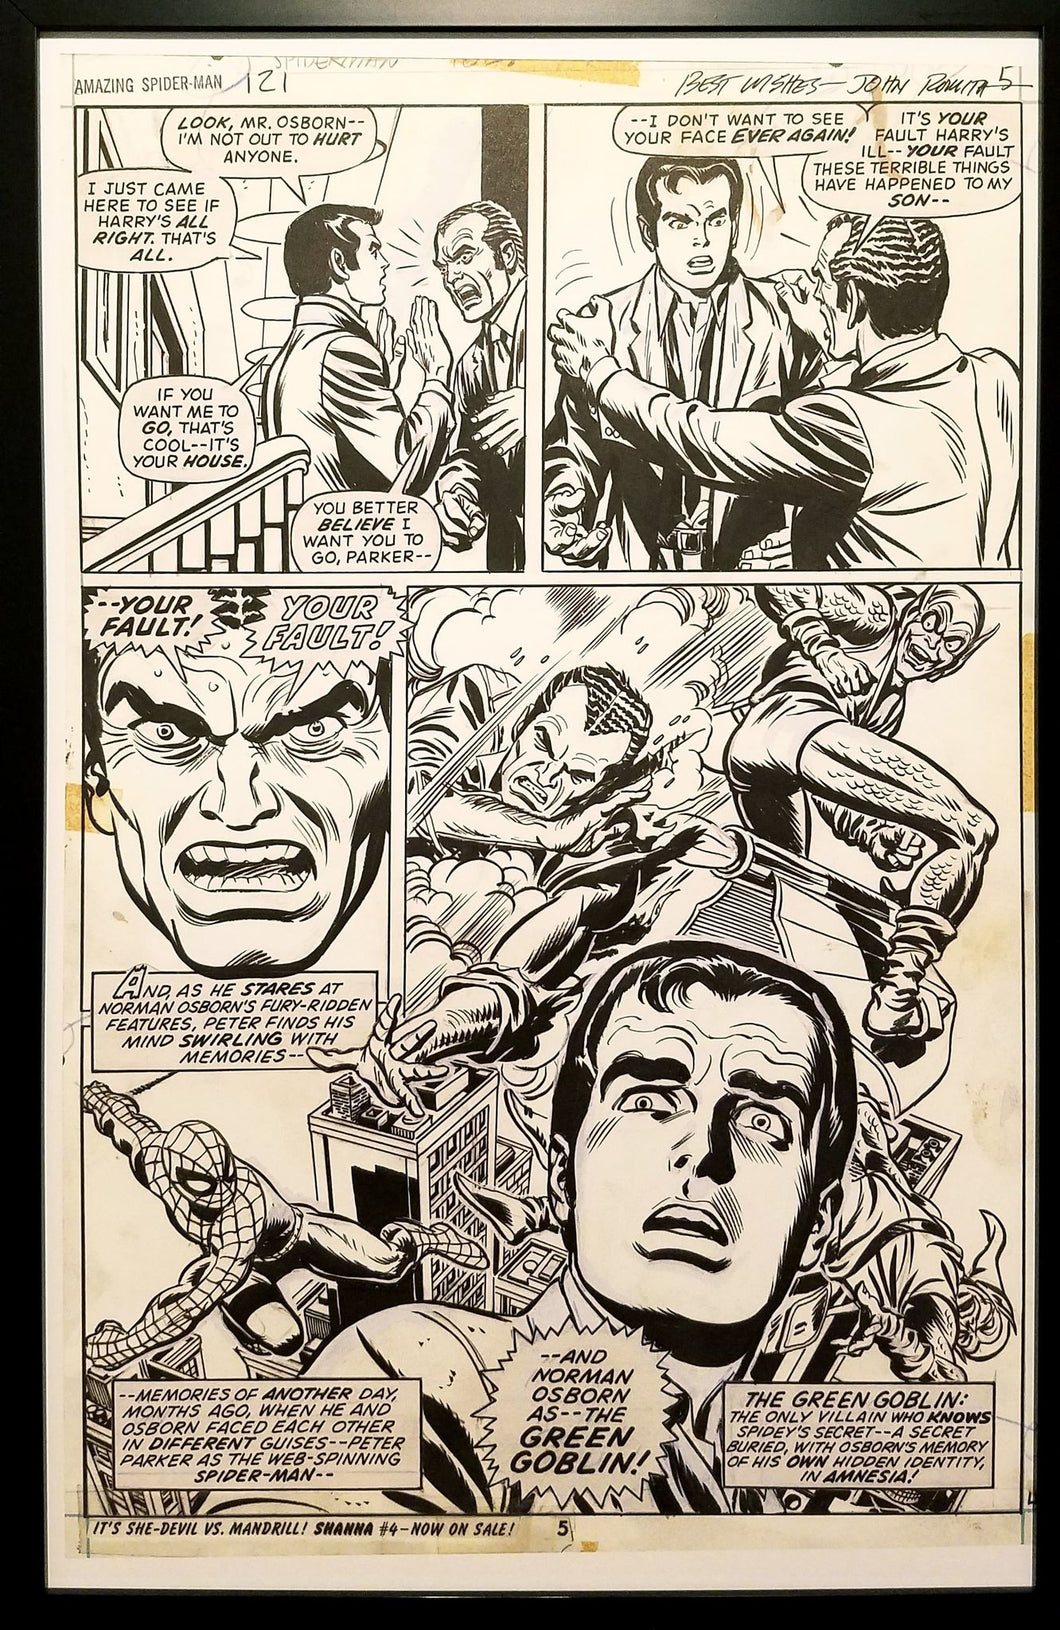 Amazing Spider-Man #121 pg. 4 Gil Kane 11x17 FRAMED Original Art Poster Marvel Comics